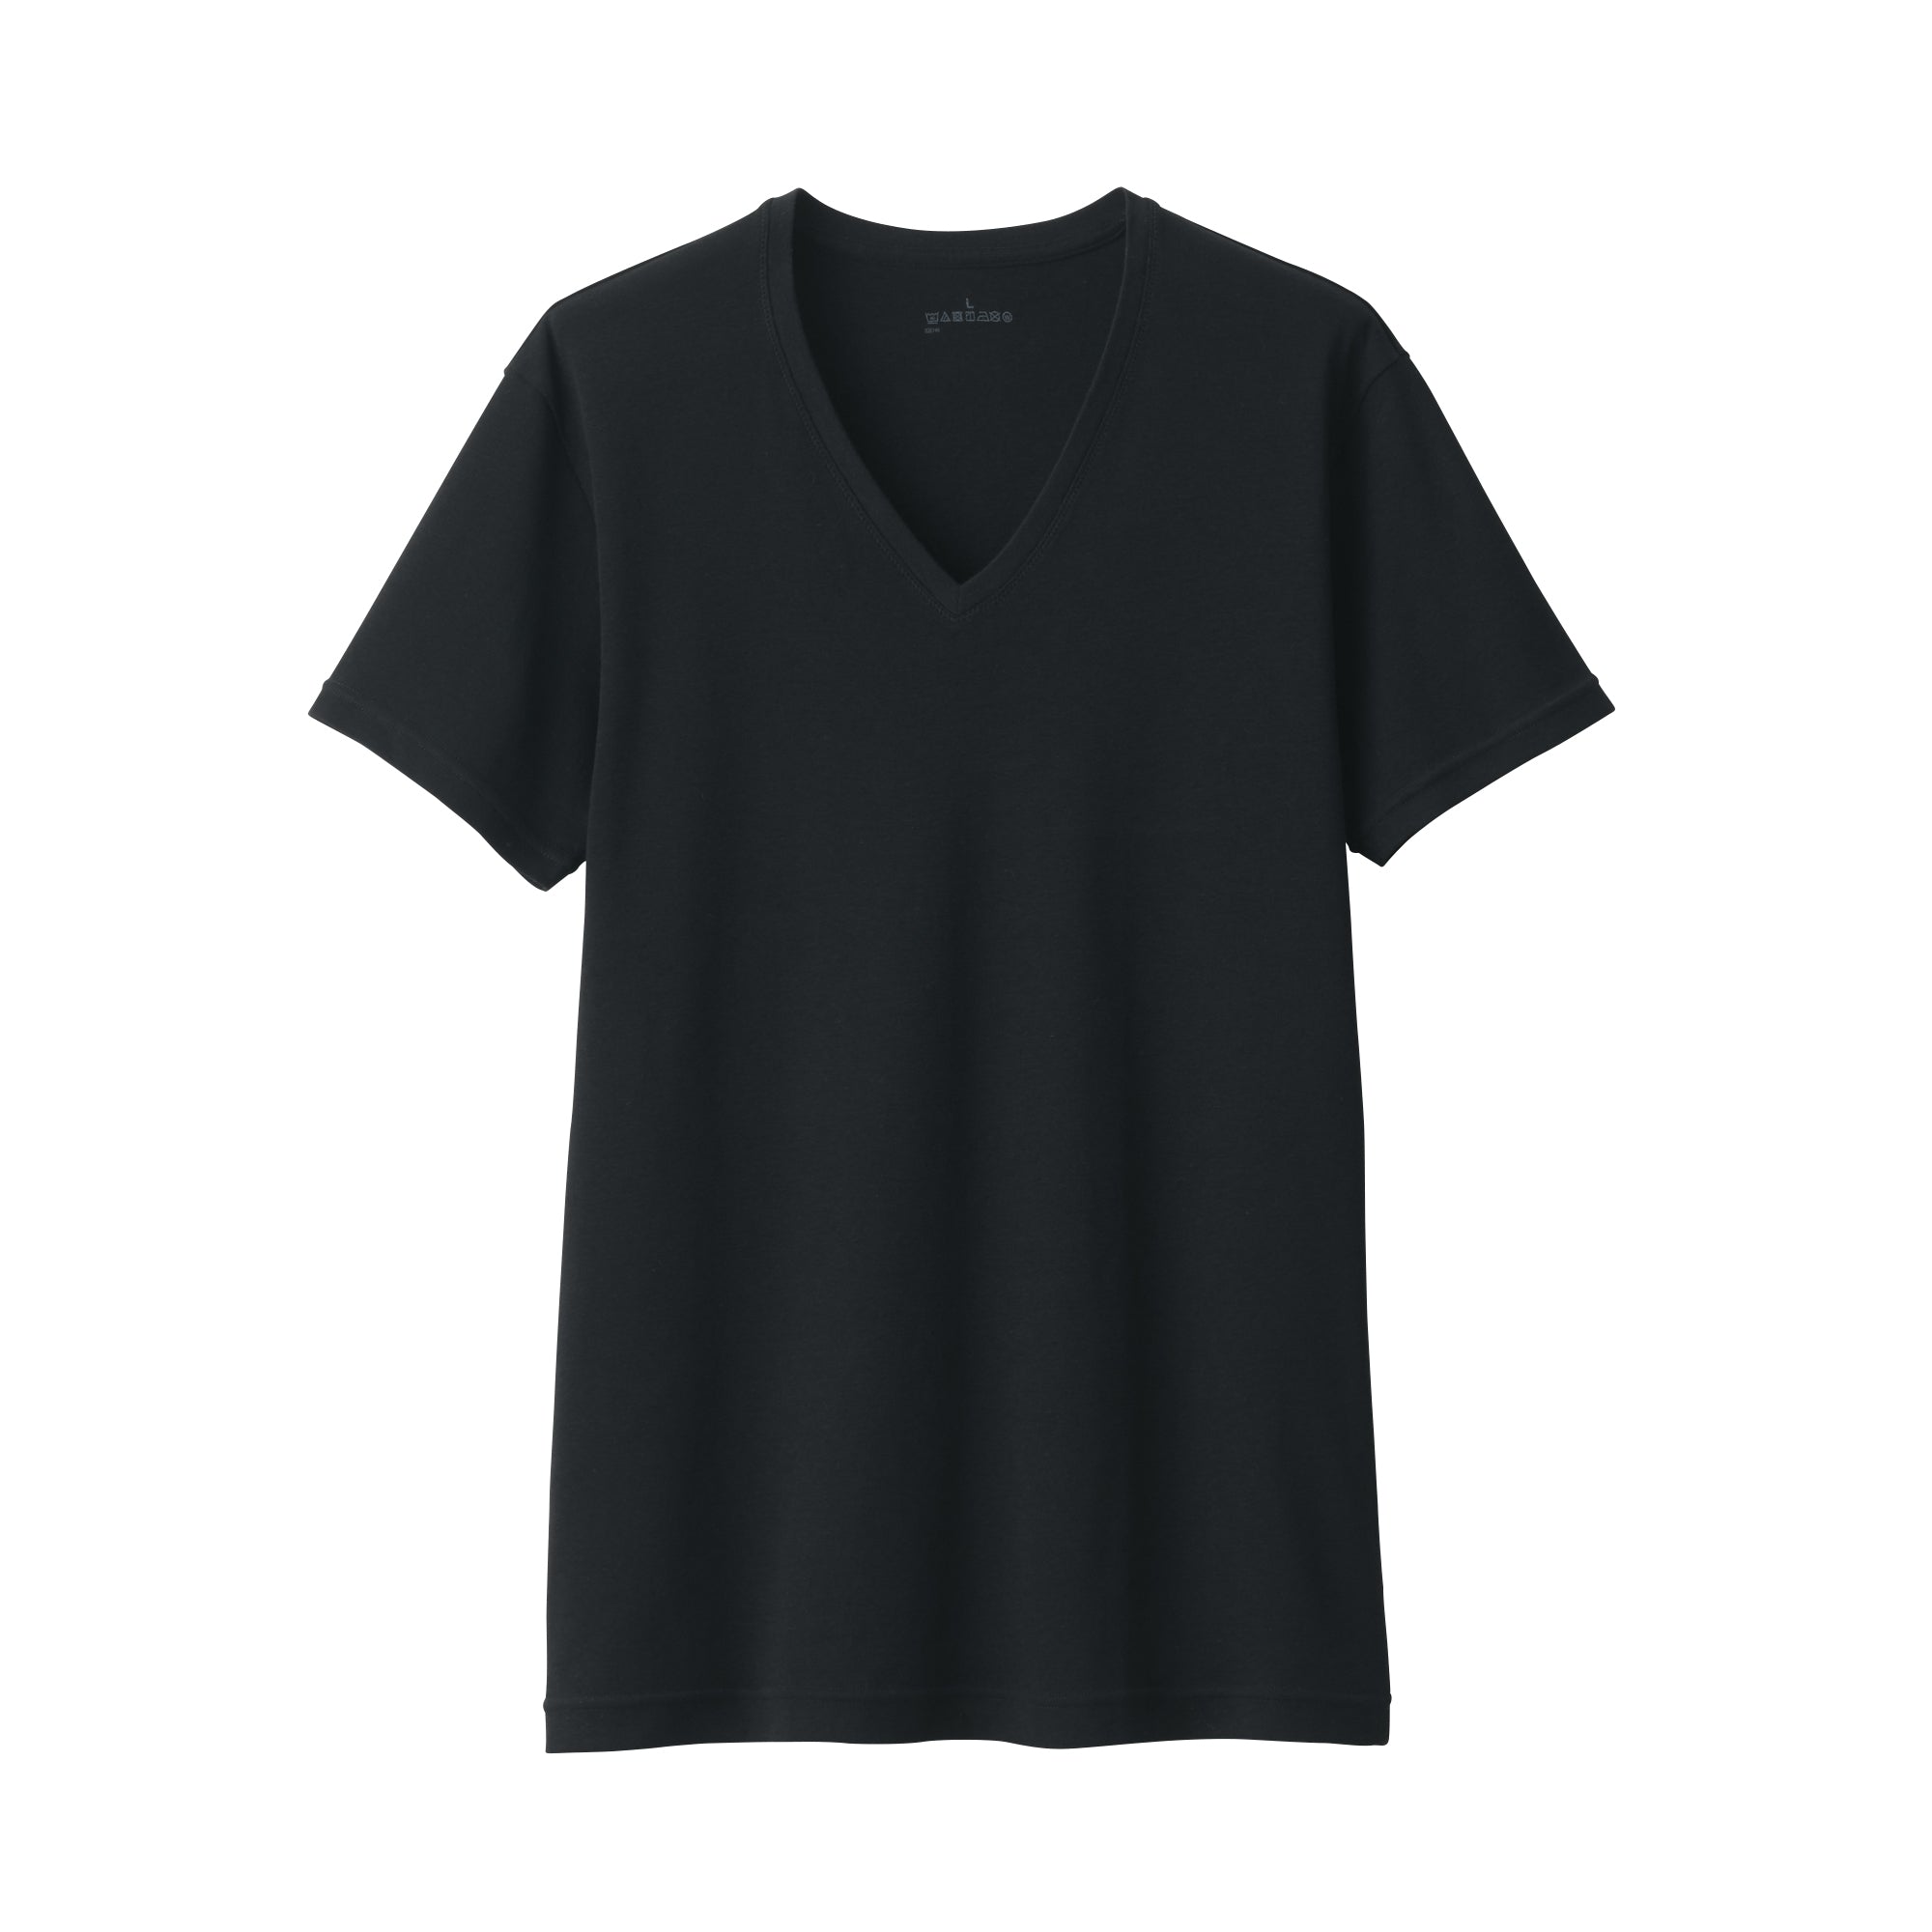 Men's Breathable Cotton V-Neck Short Sleeve T-Shirt